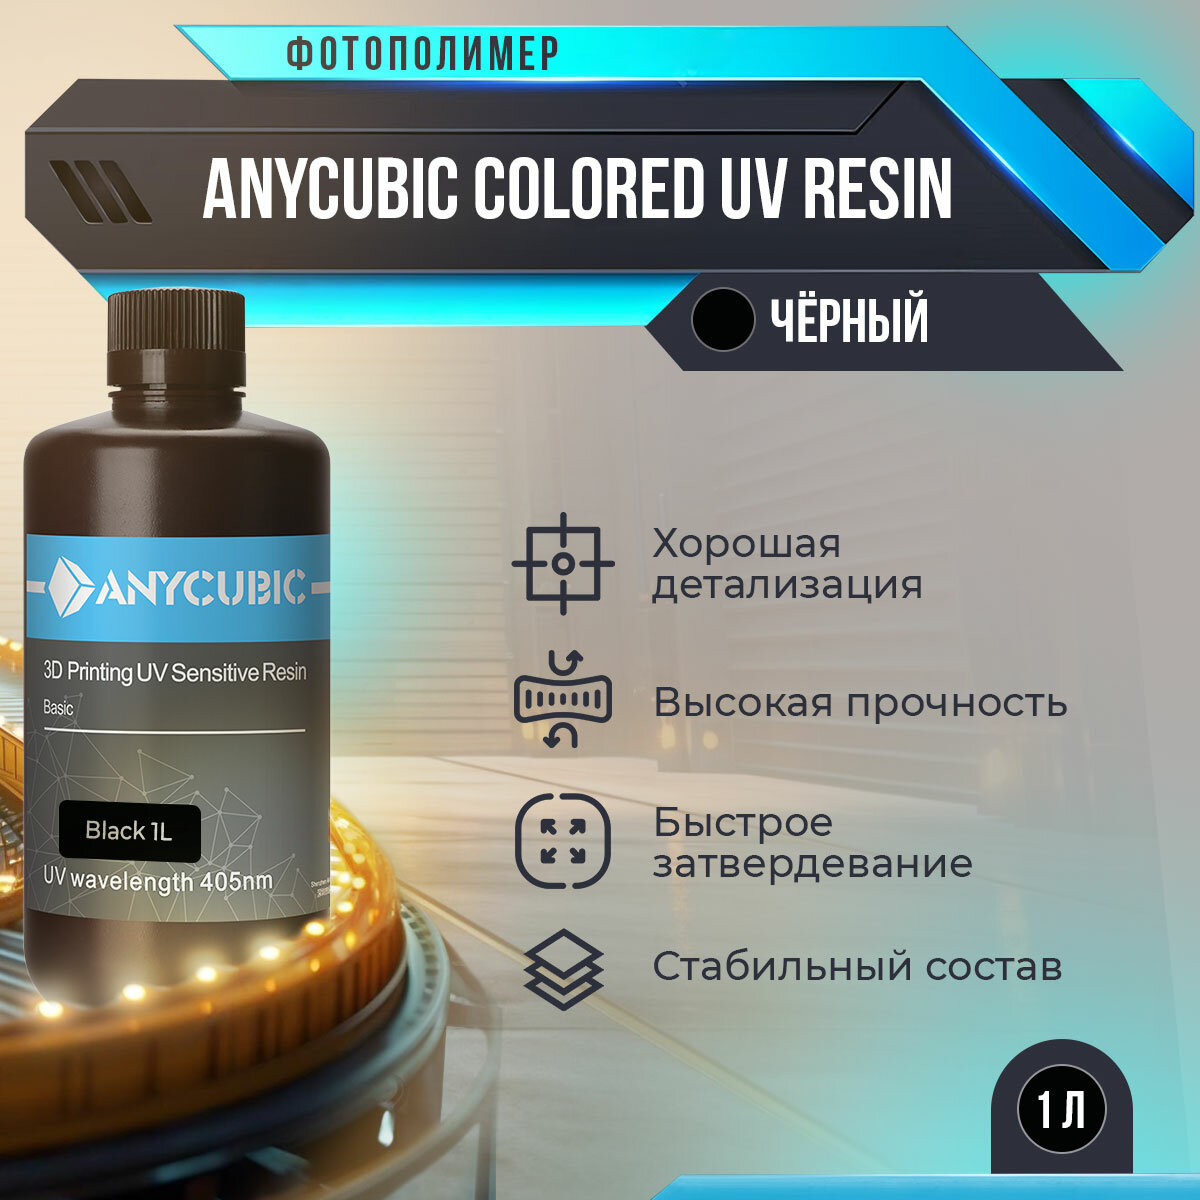 Фотополимер Anycubic Colored UV Resin Чёрный, 0.5 л